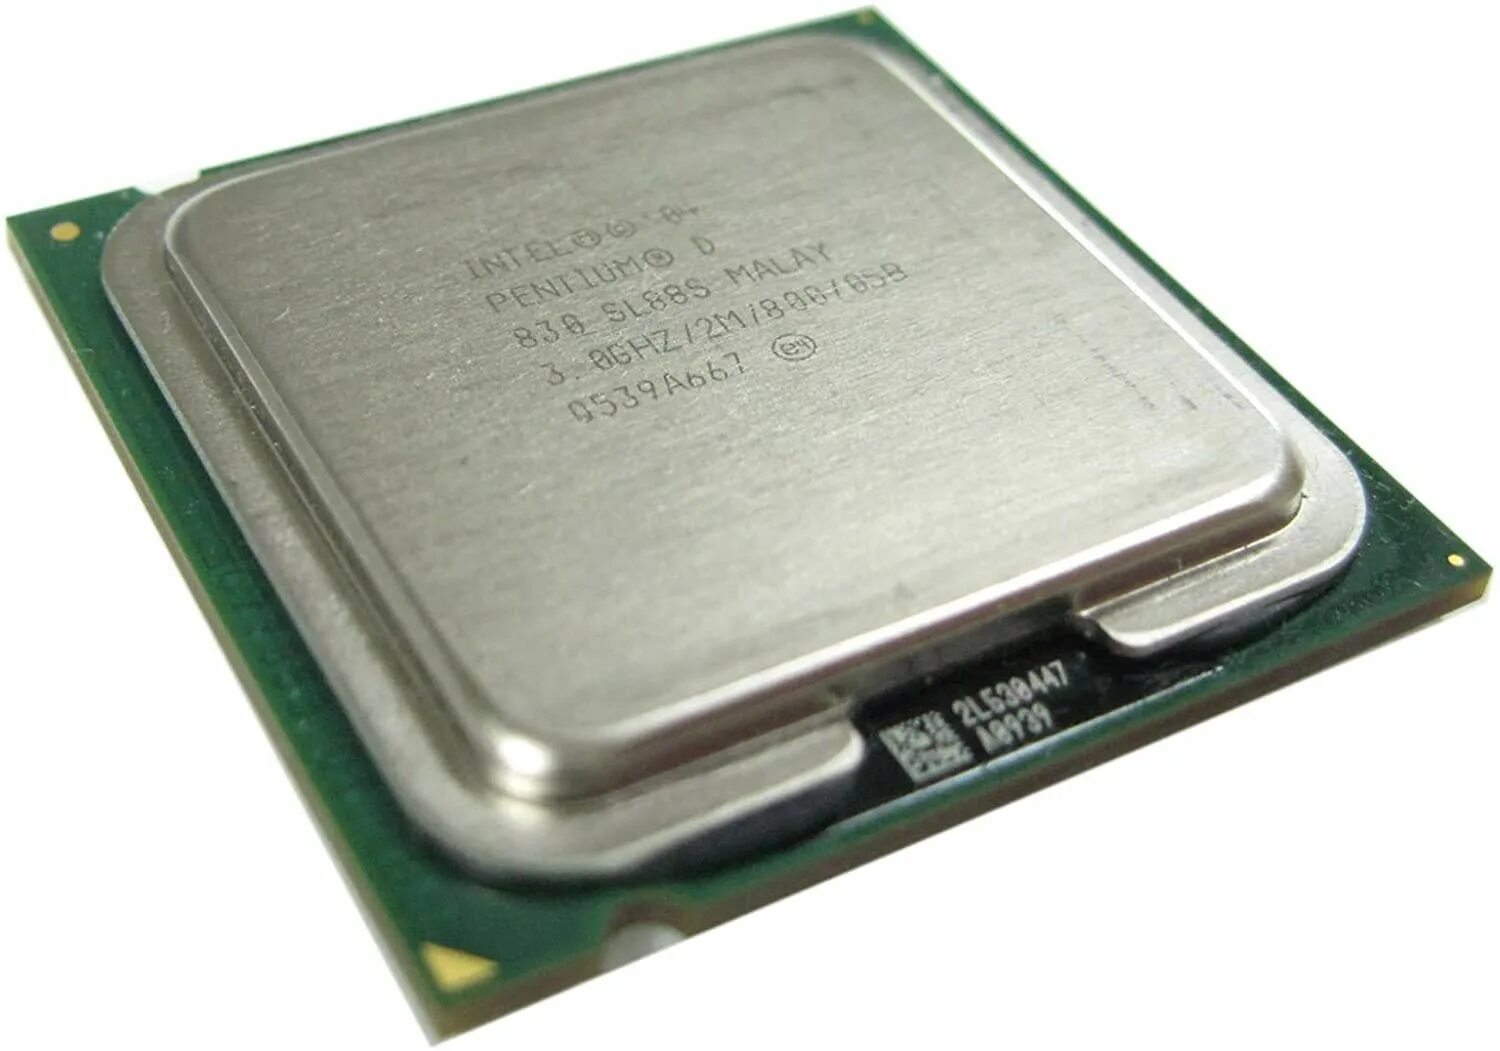 Процессор Intel Pentium d 830. Процессор Intel Core 2 Duo mobile t7300 Merom. Процессор Intel Xeon e5-2680 Sandy Bridge-Ep. Процессор: Intel Pentium d 830 @ 3.00GHZ; AMD Athlon 64 x2 Dual Core 3600+. Процессор интел для игр